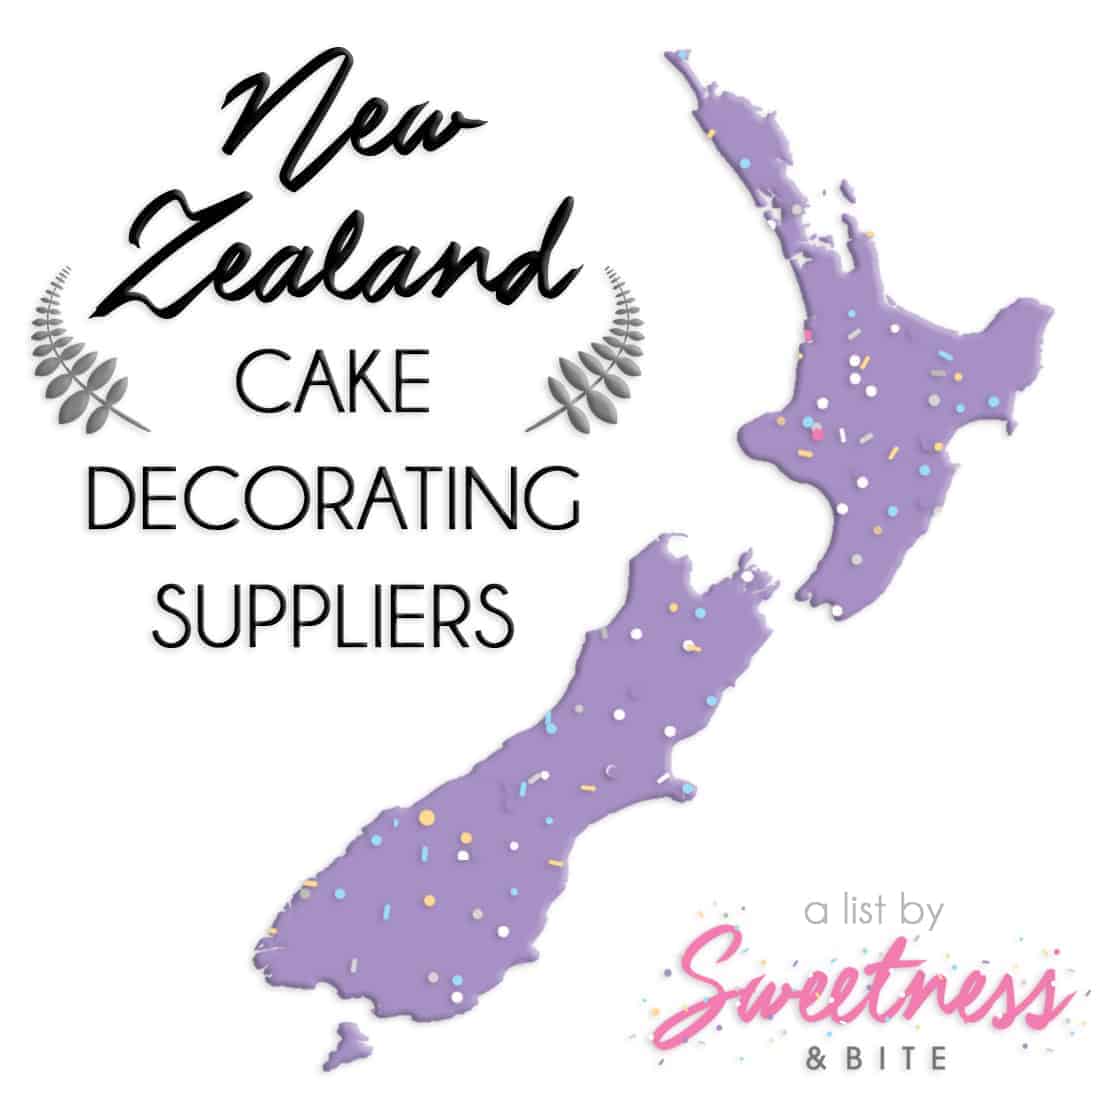 New Zealand Cake Decorating Suppliers - Sweetness & Bite